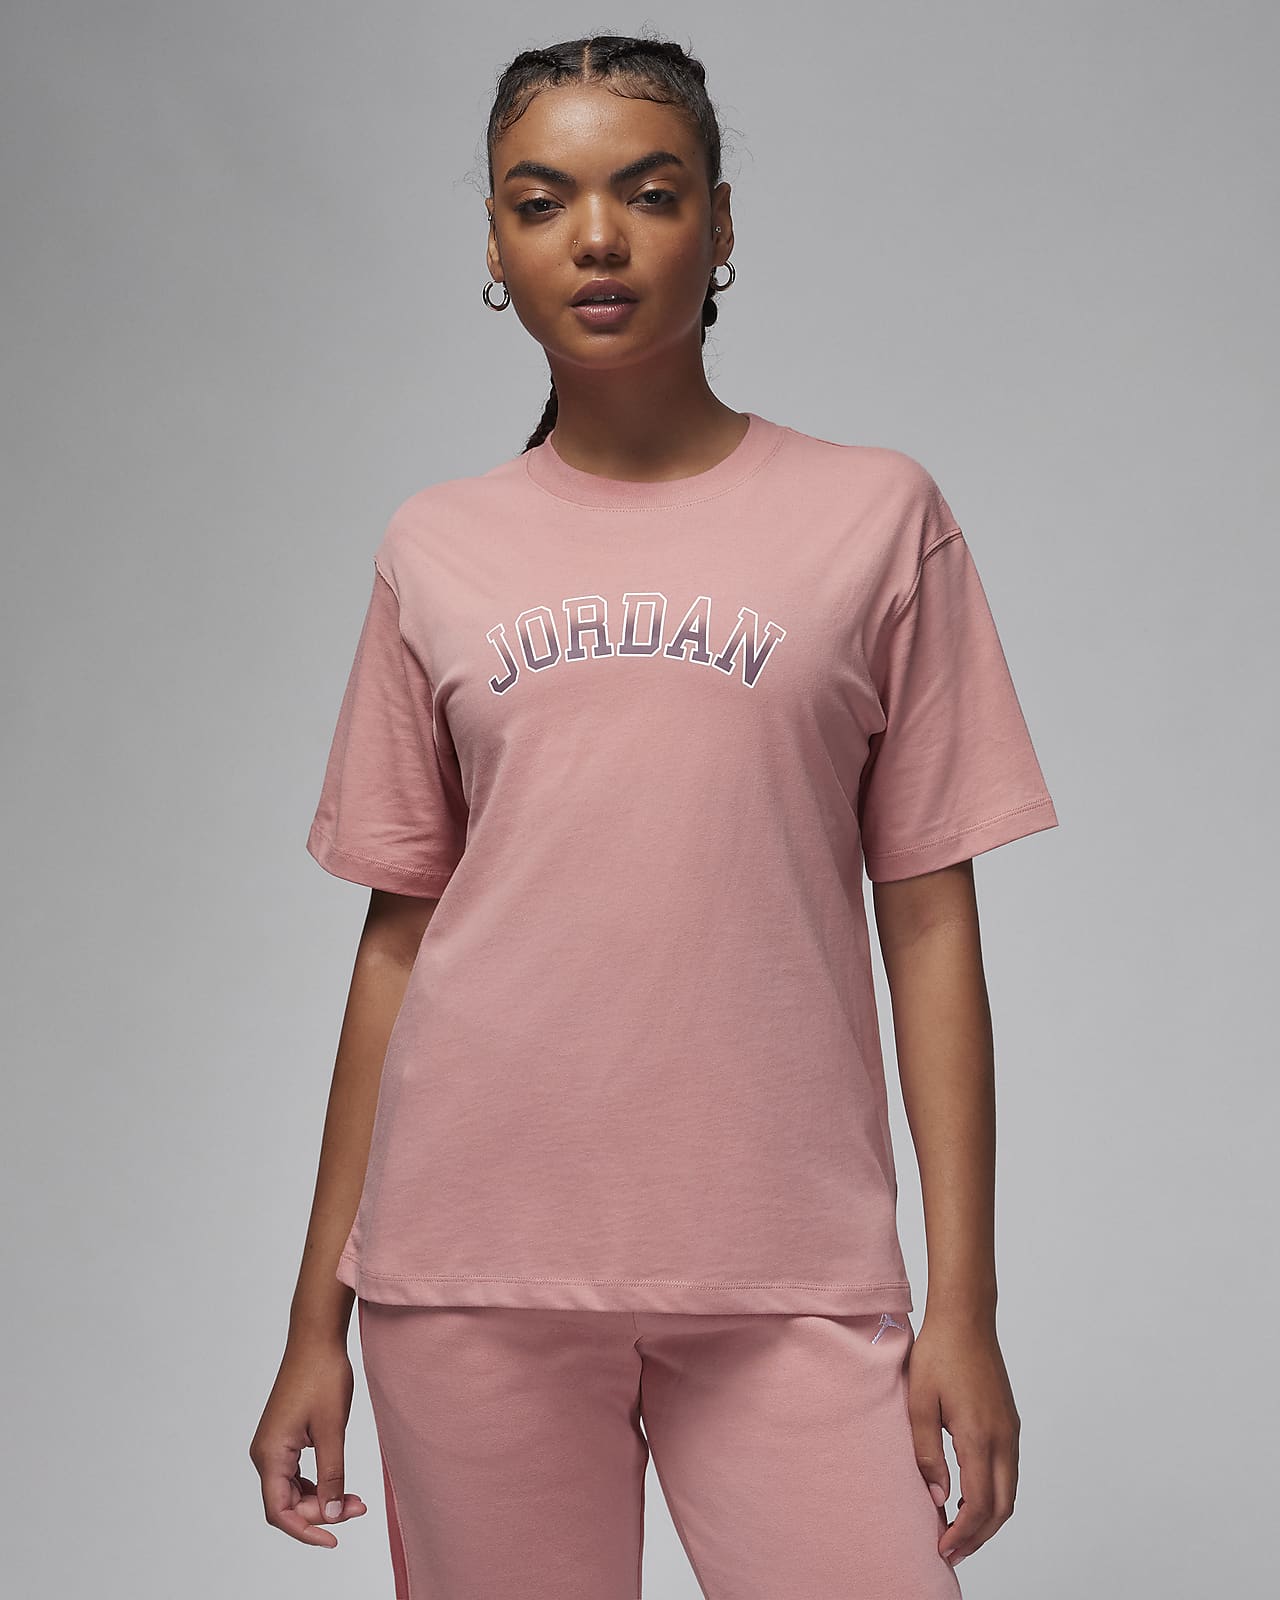 Jordan Women's Graphic T-Shirt